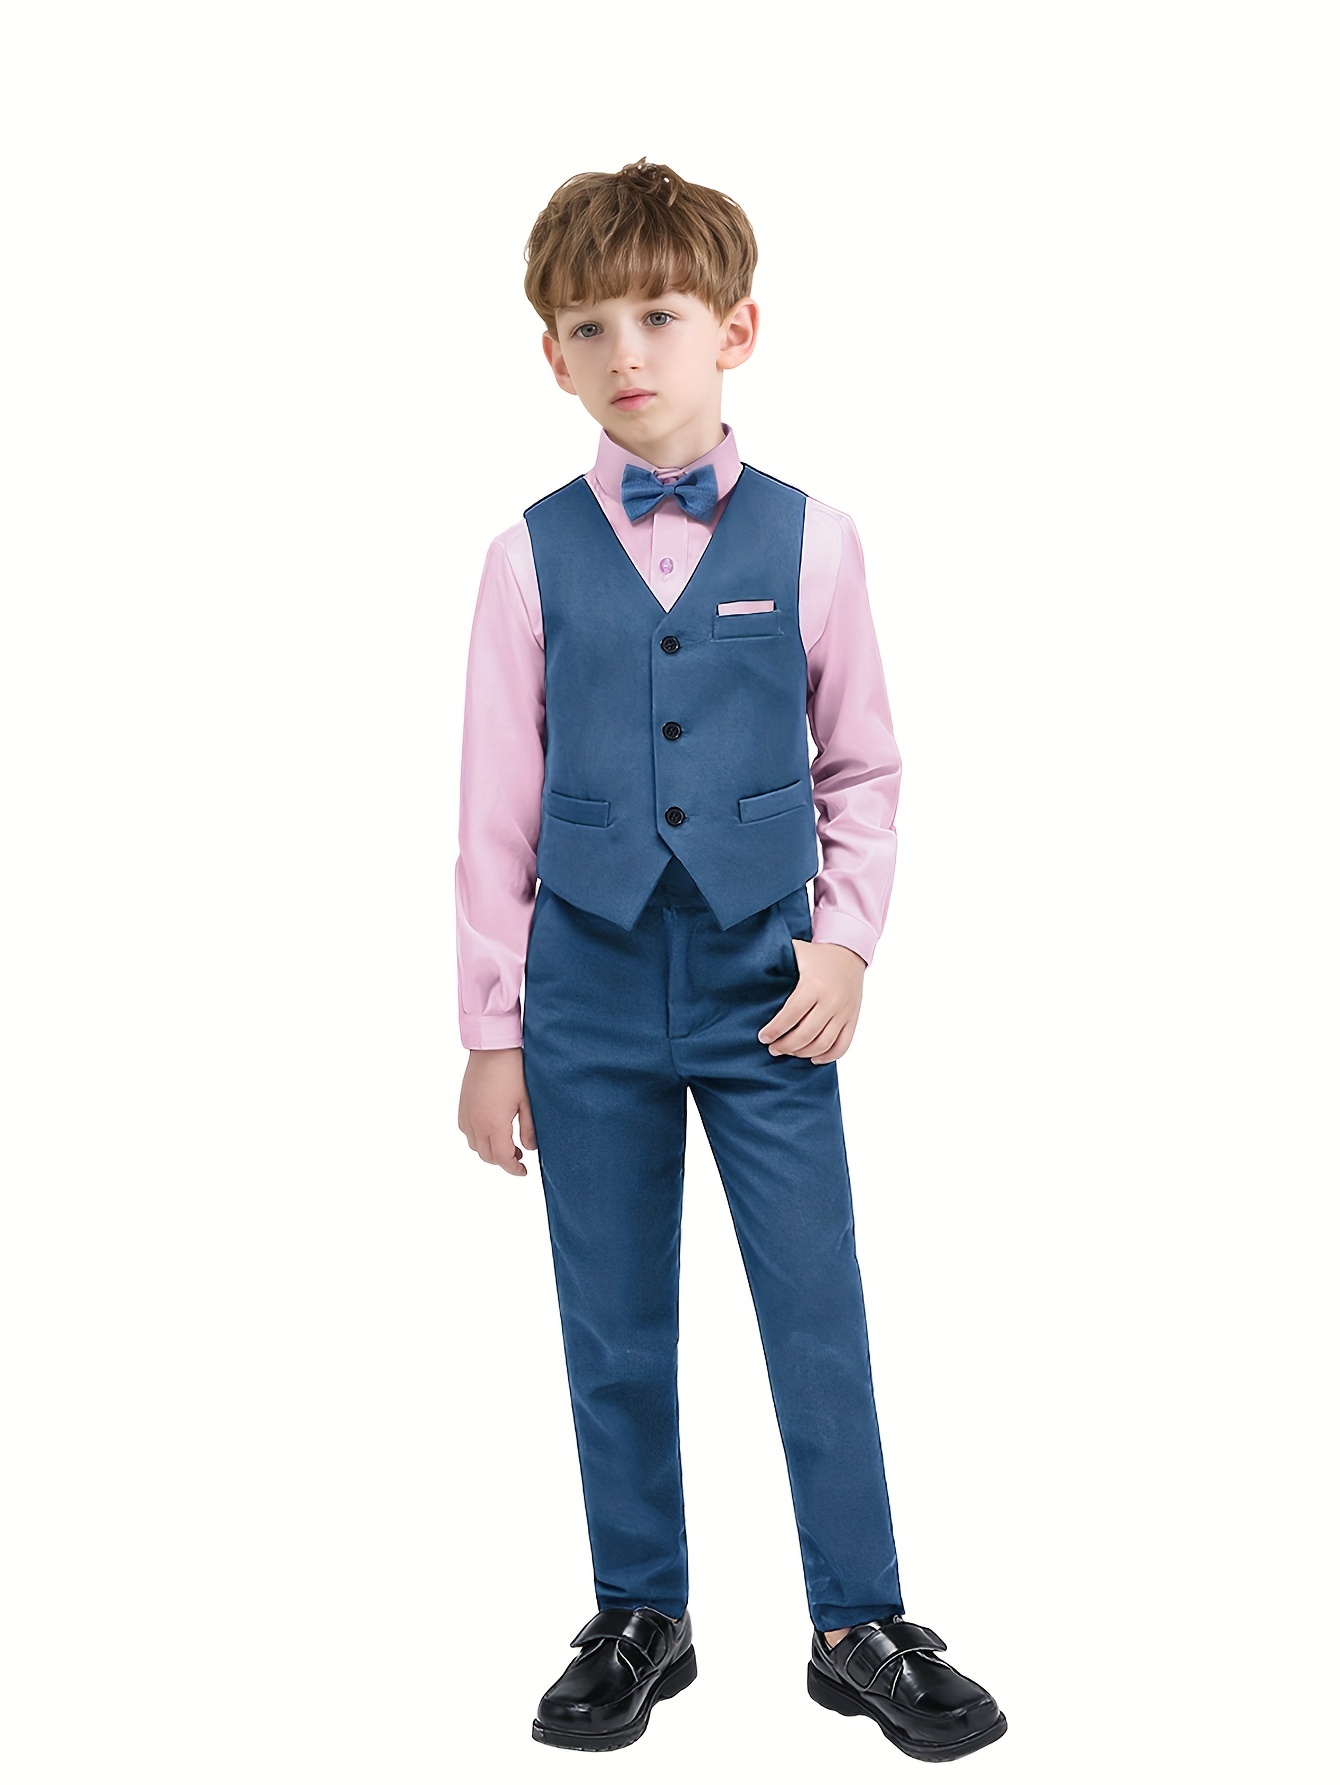 4Pcs Kids Baby Boys Gentleman Outfits Party Formal Suit+Shirt+Bow Tie+Pants  Set